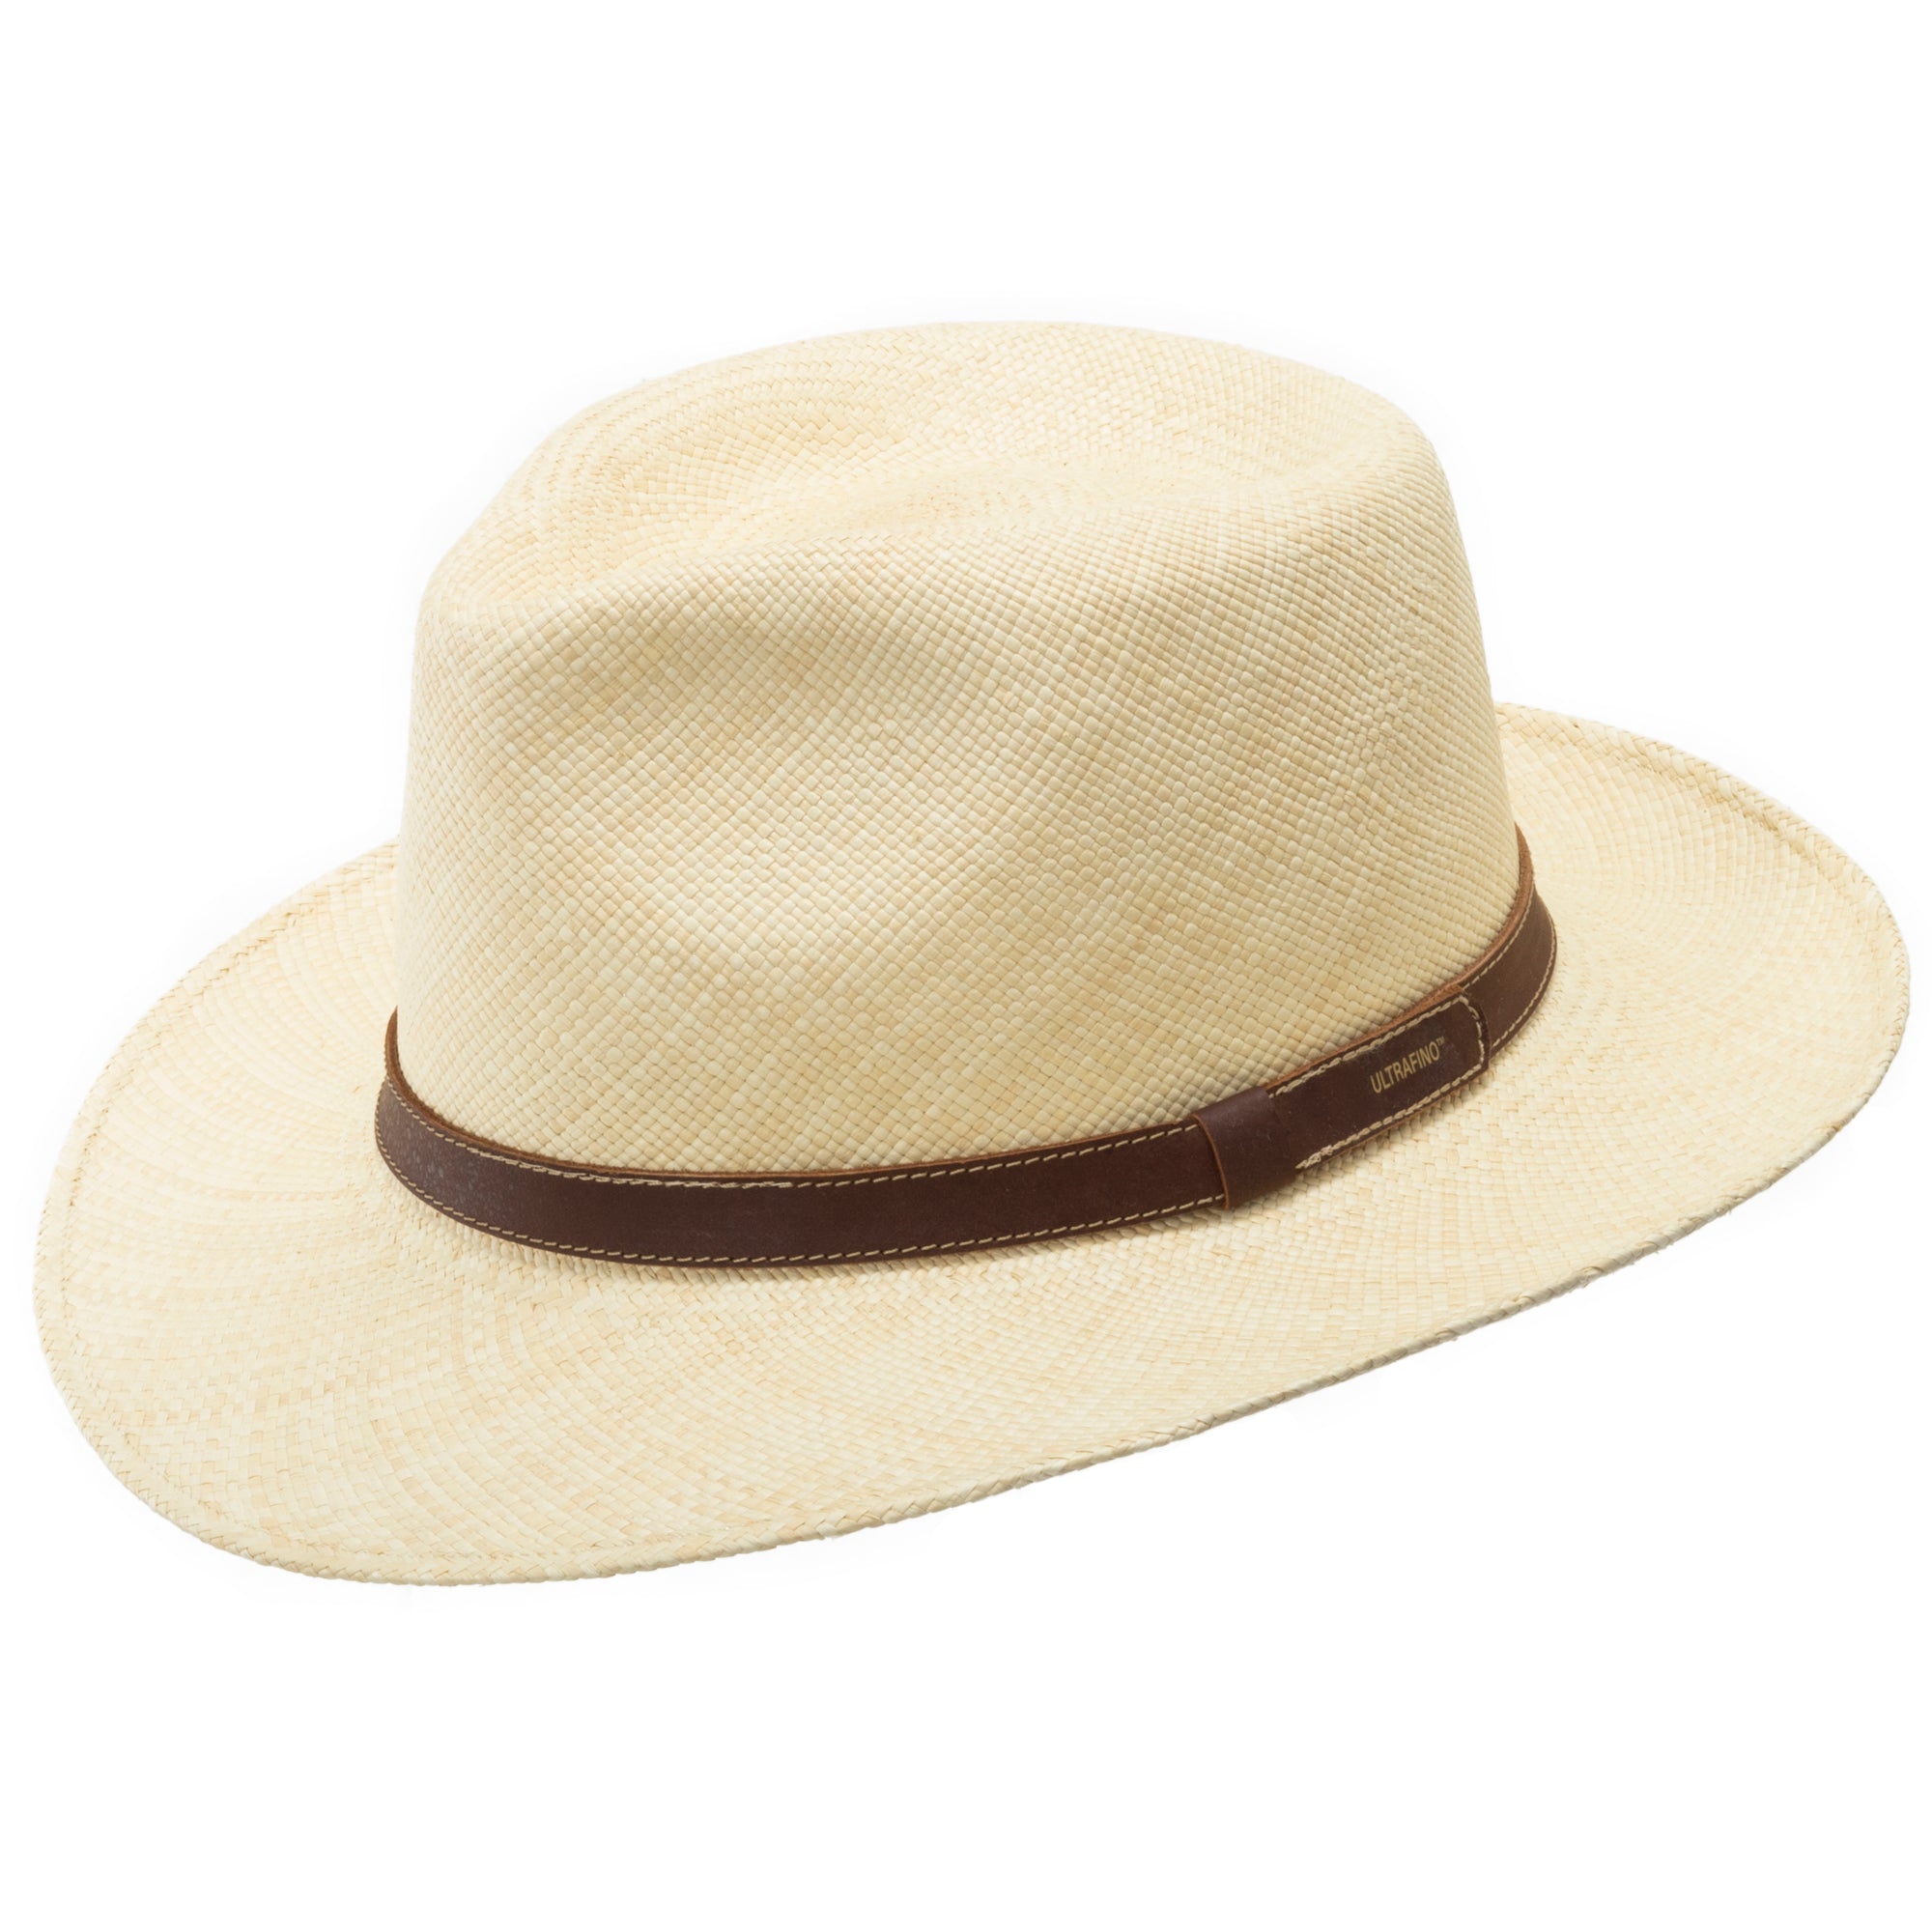 panama hats for men